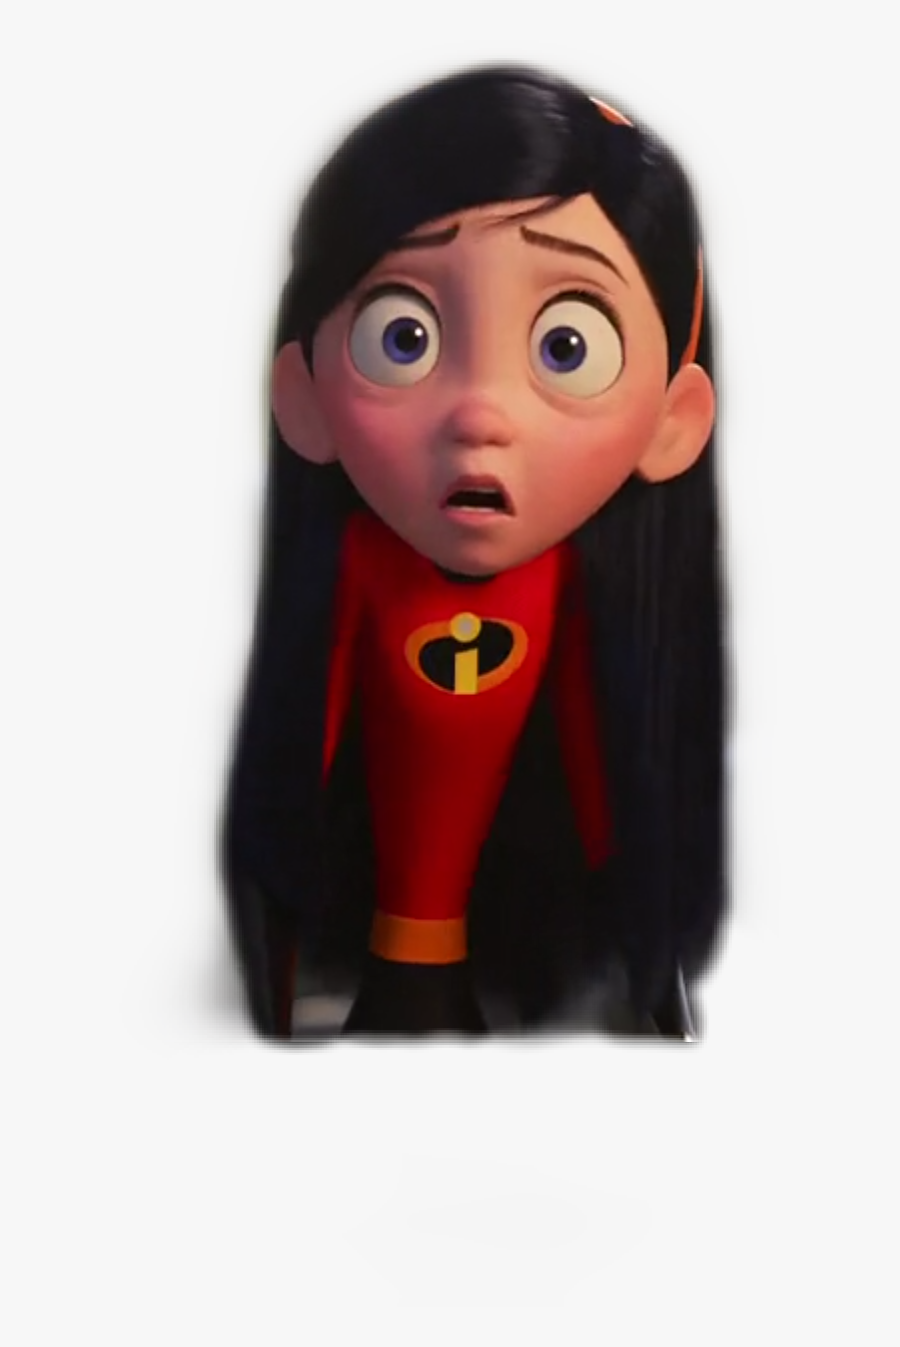 #incredibles2 
#disney 
#violet 
#incredibles
#pixar - Tony Rydinger The Incredibles 2, Transparent Clipart